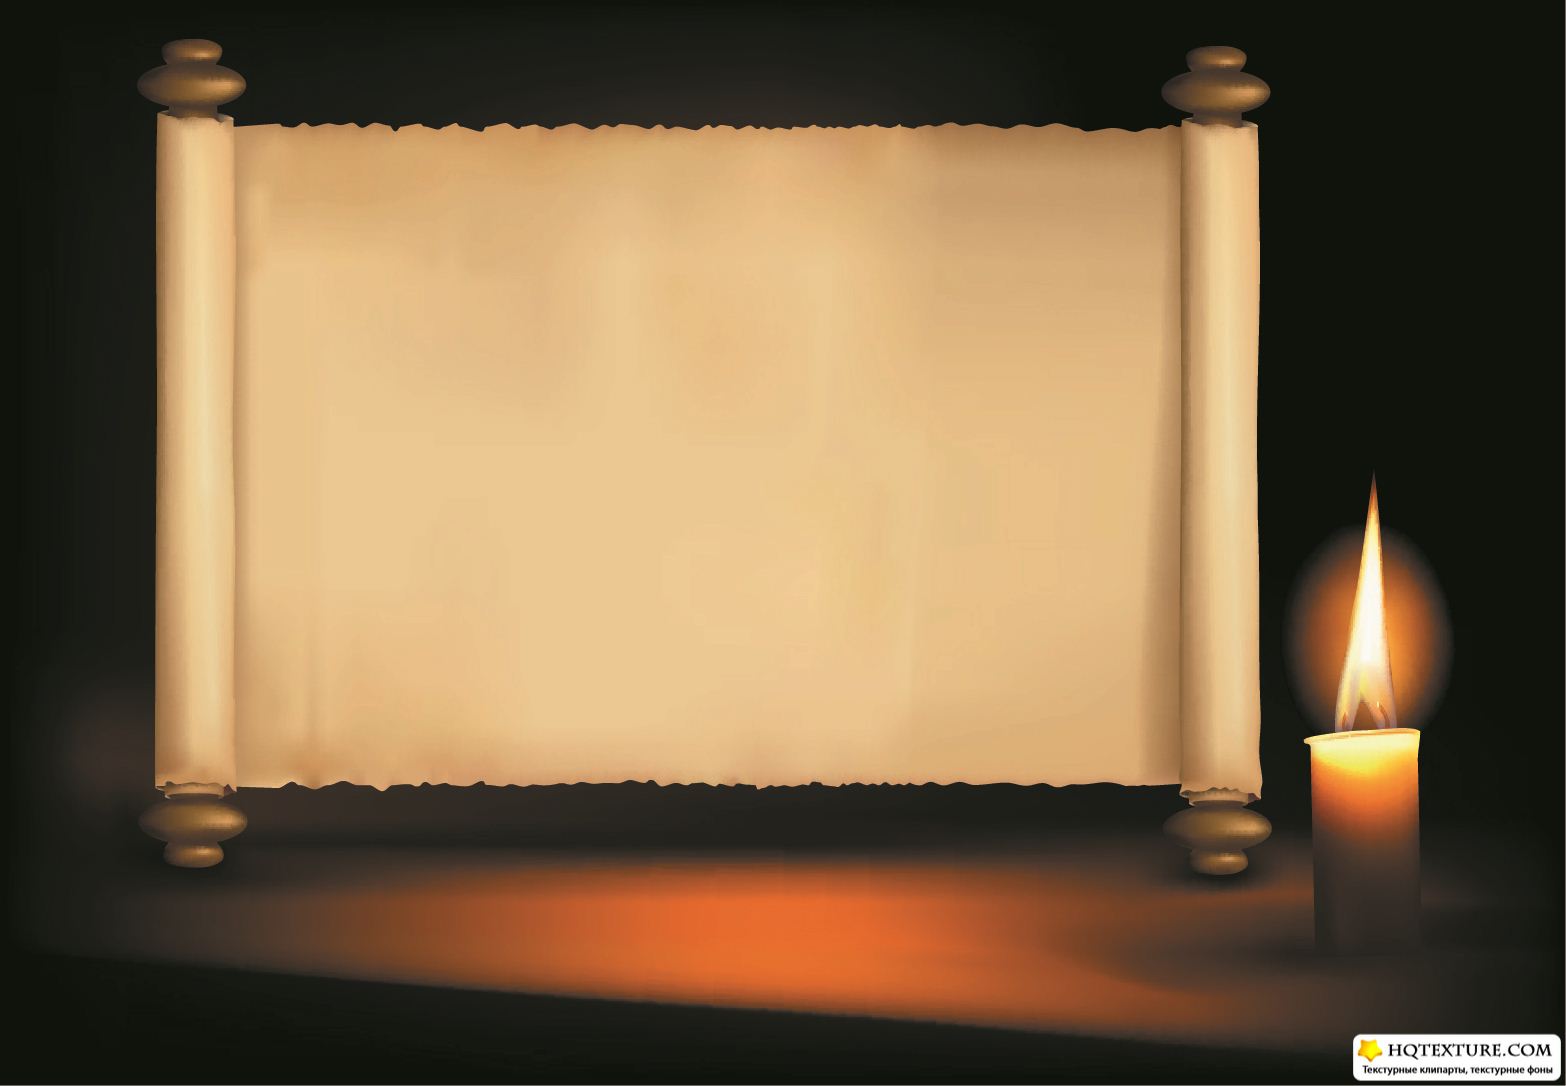 wallpaper warna coklat,lighting,light,flame,candle,rectangle